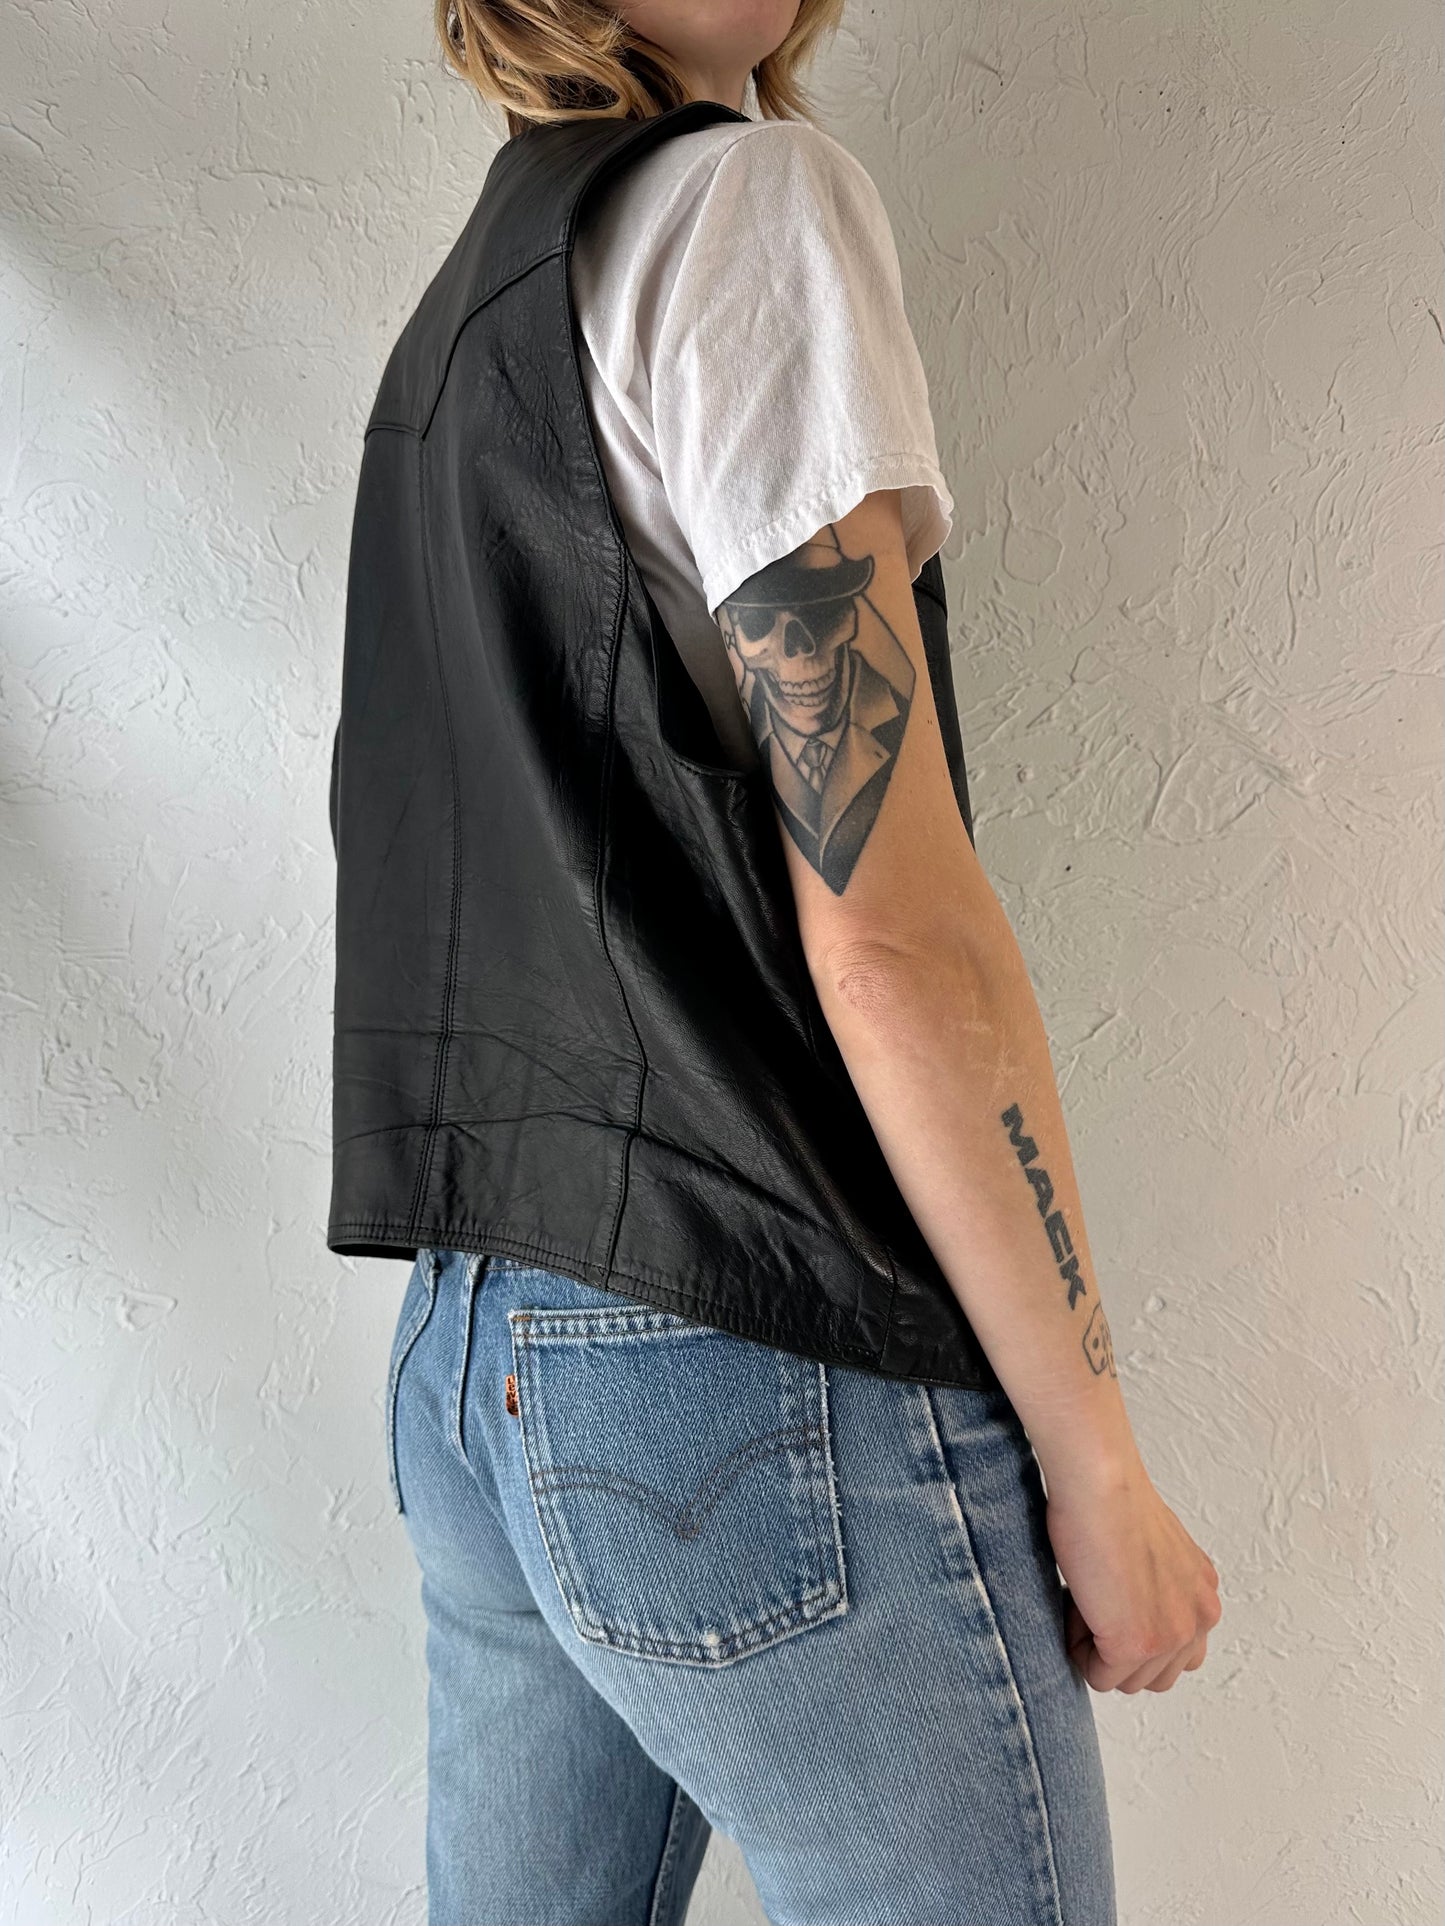 90s 'Expressions' Black Leather Vest / Large